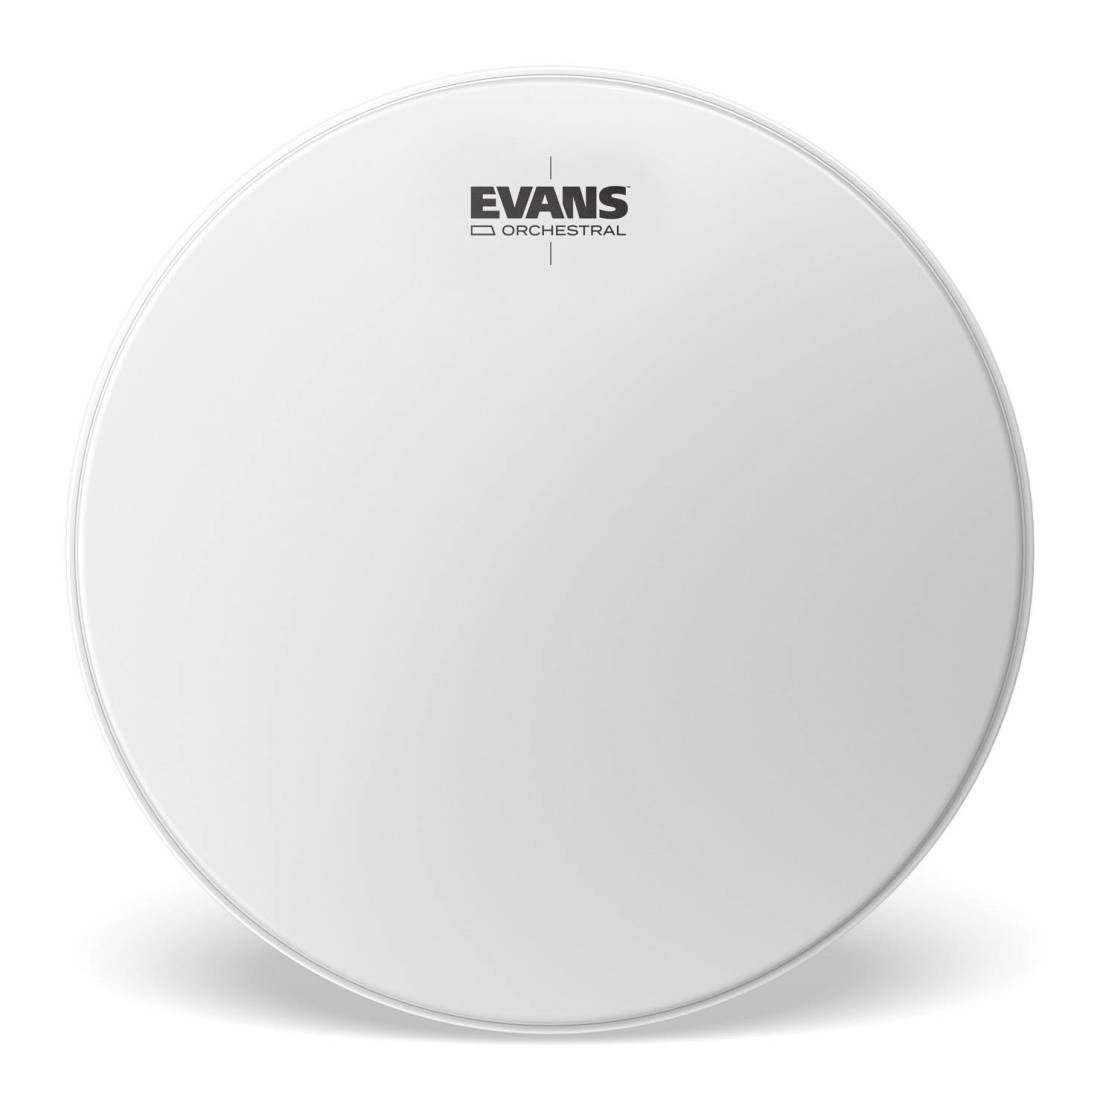 ET3350 - Evans Orchestral Timpani Drum Head, 33.5 inch